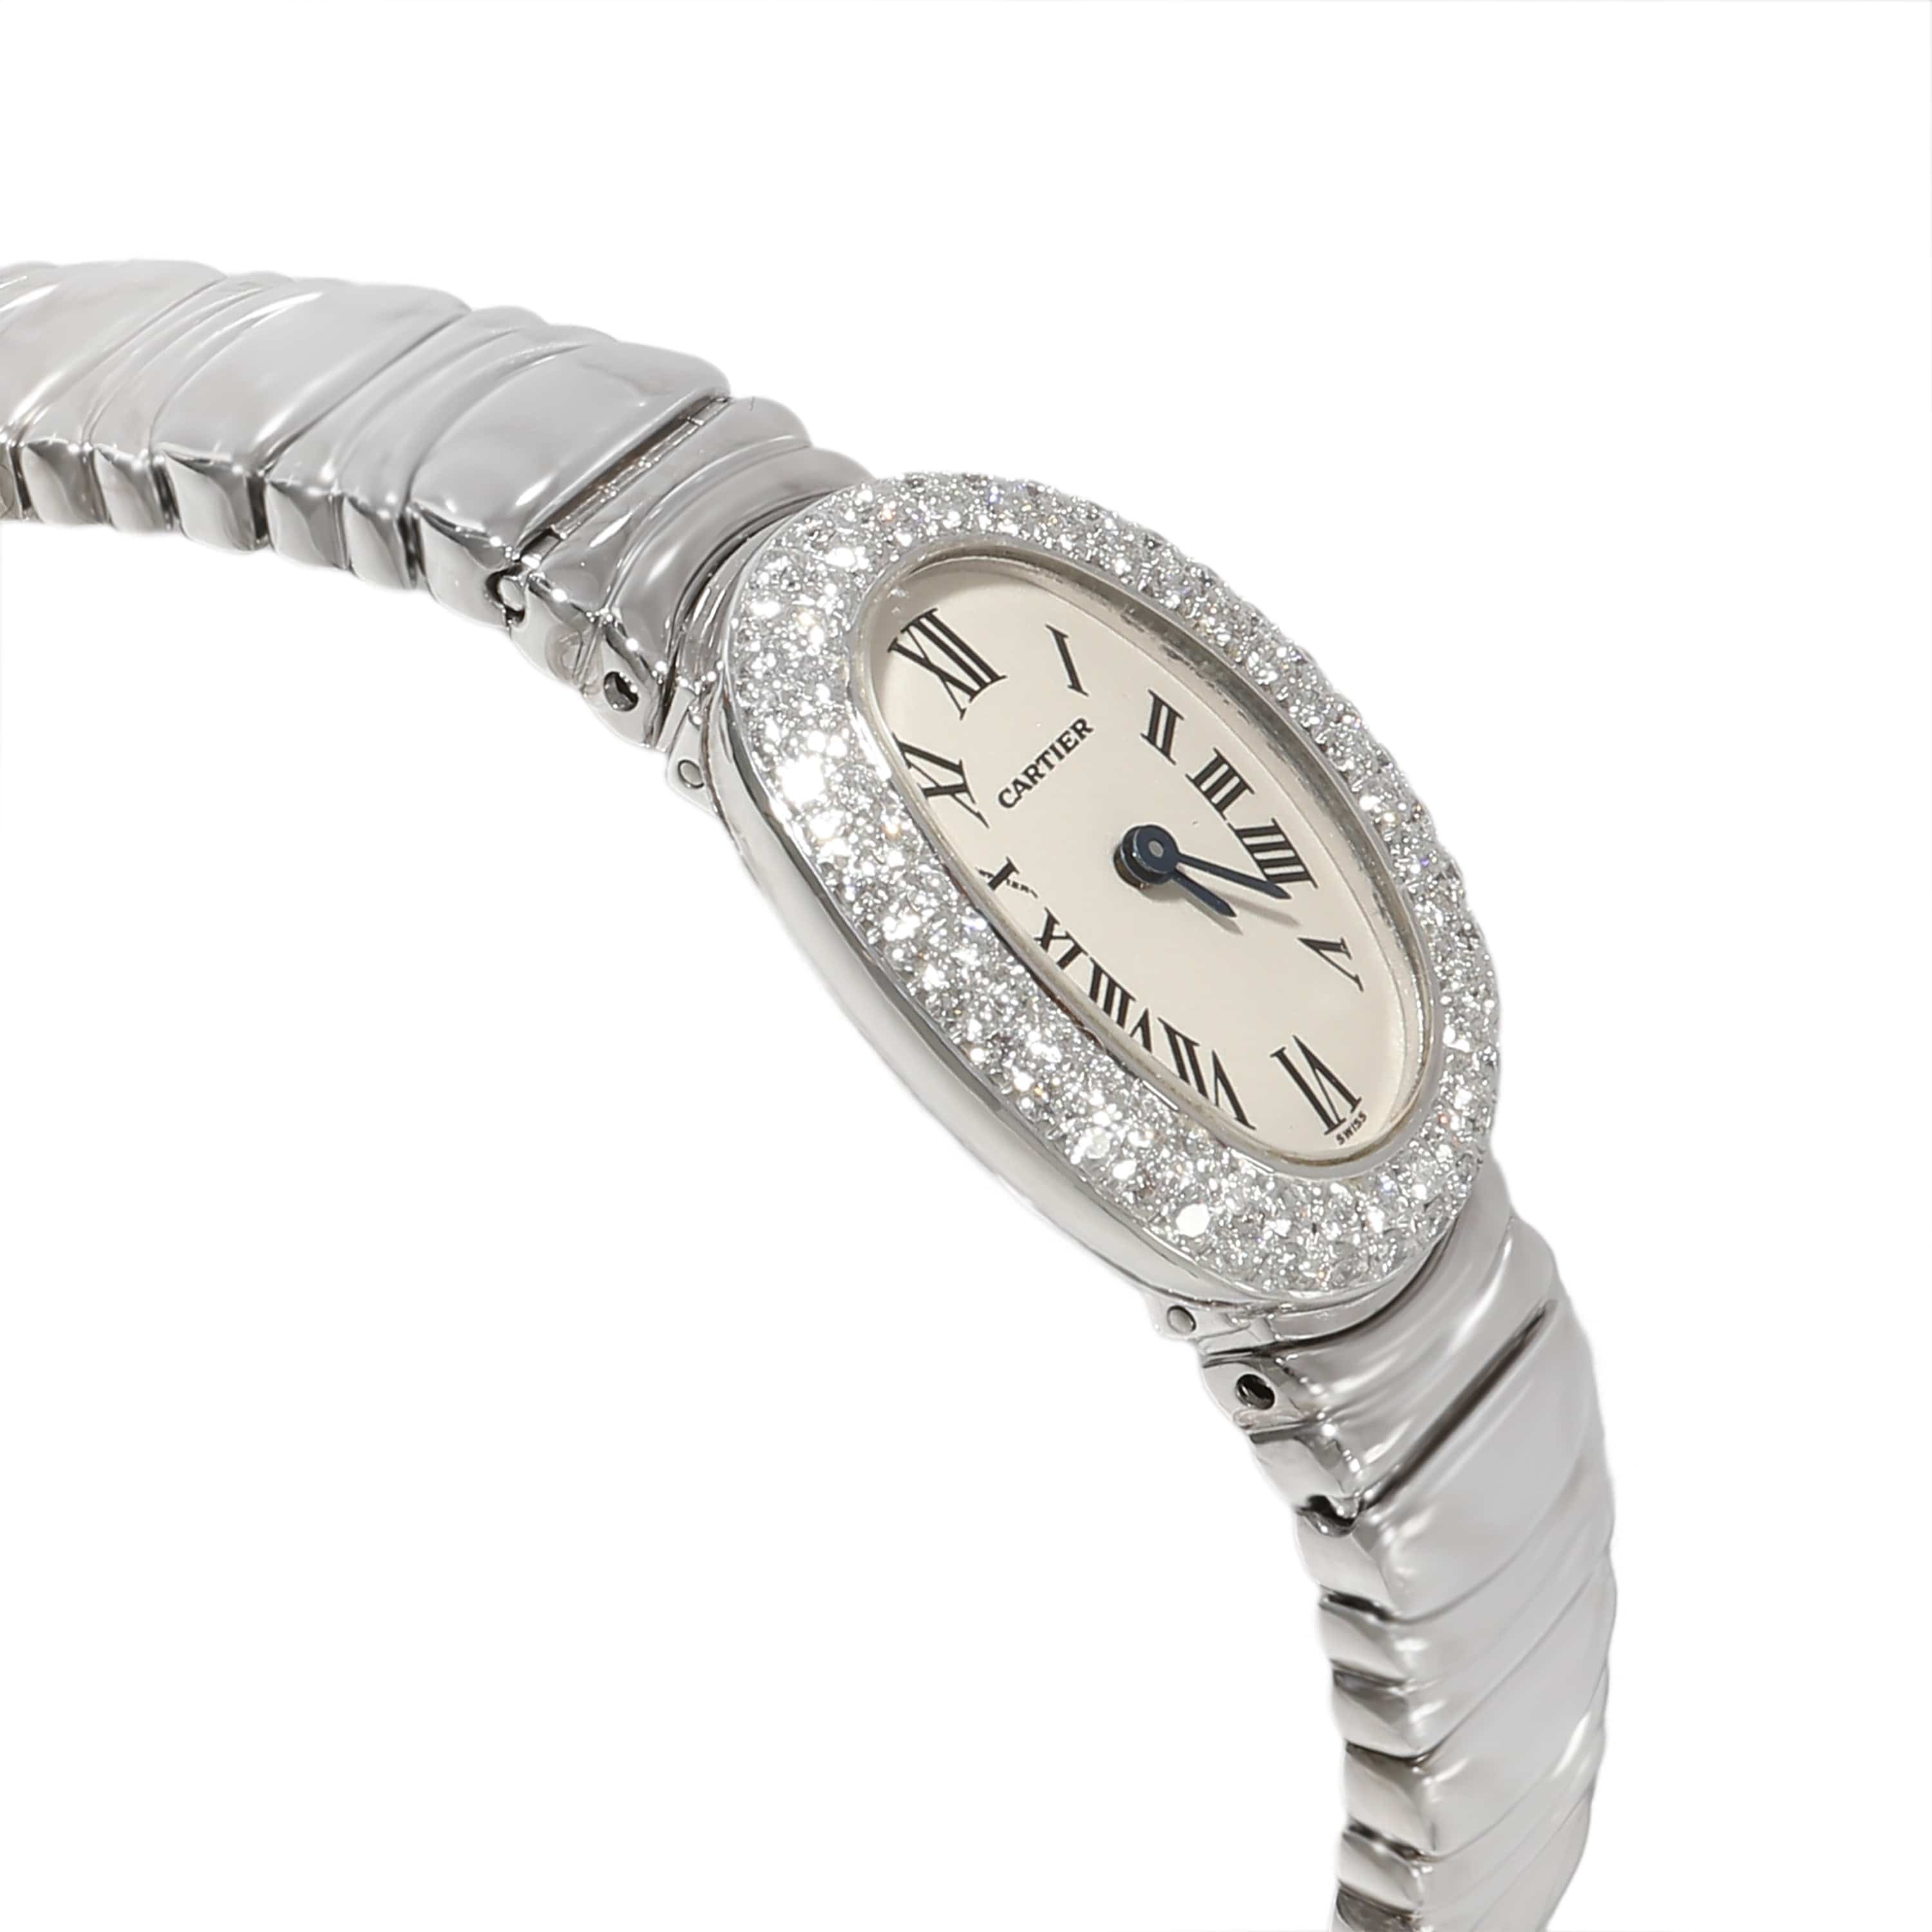 Cartier Cartier Baignoire WB5095L2 Women's Watch in 18kt White Gold